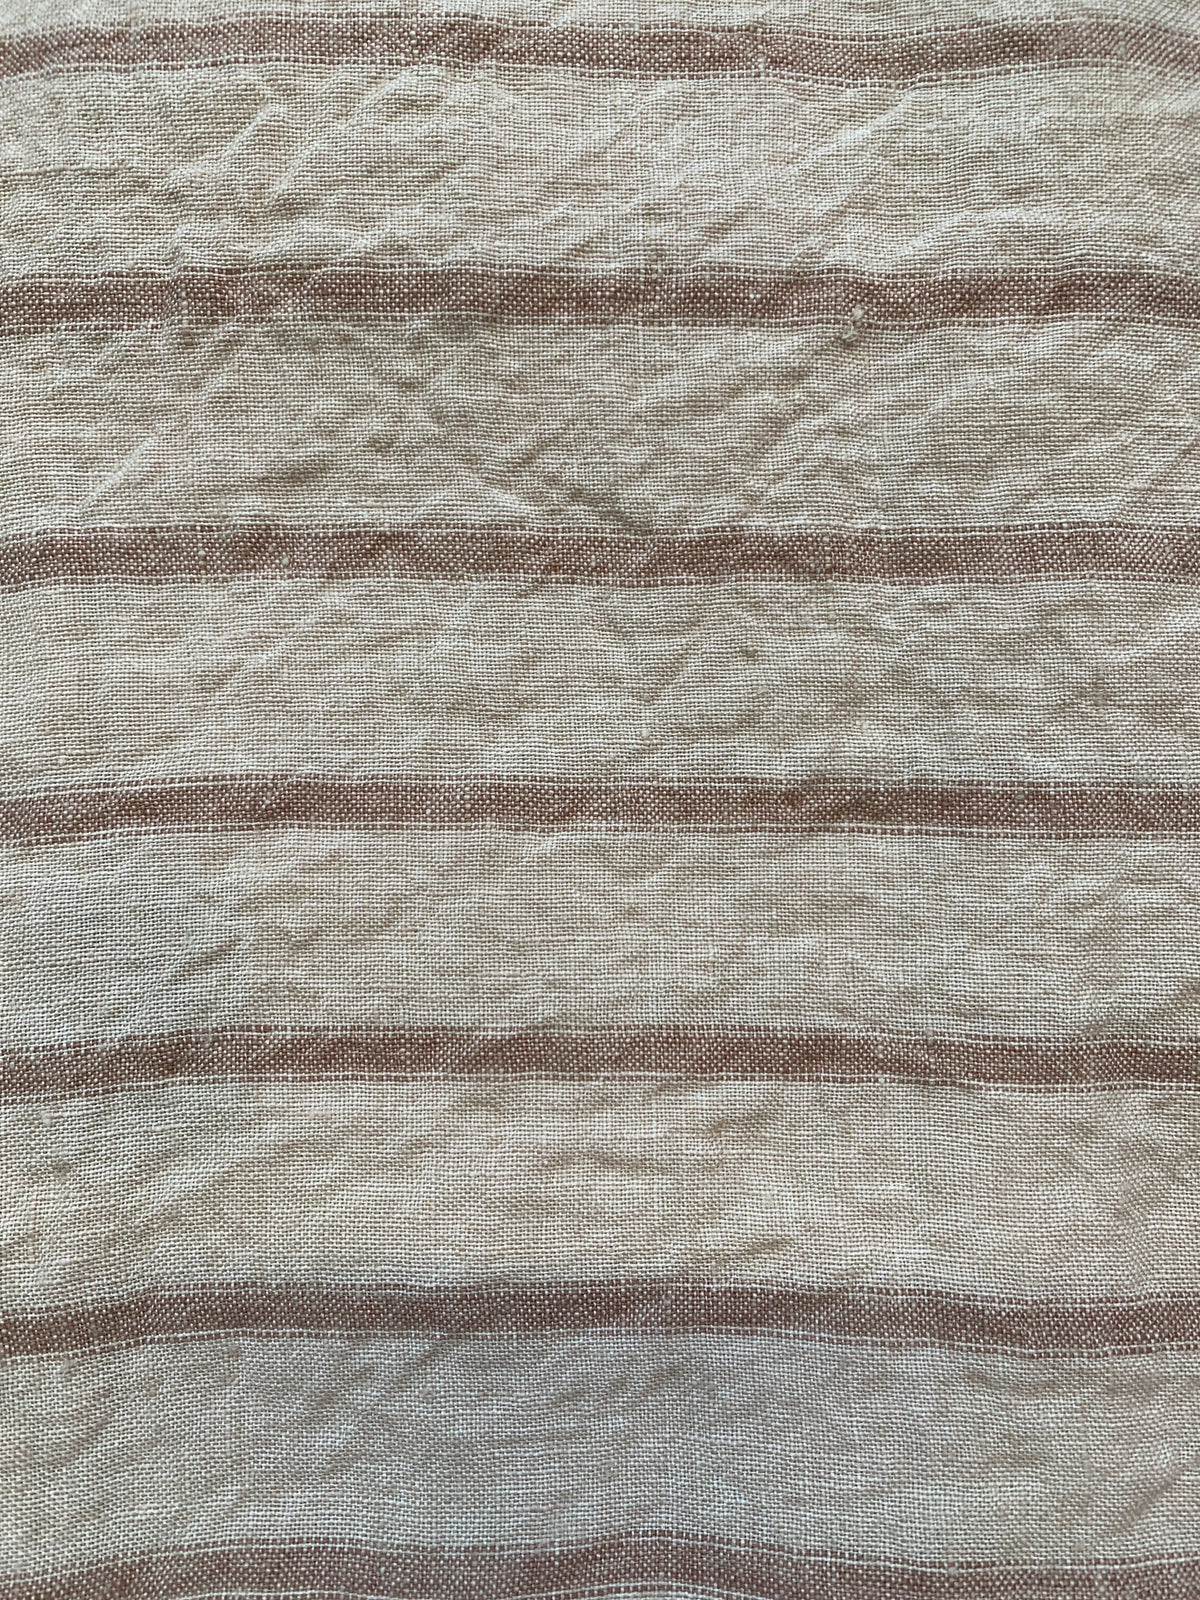 Basix Stripe Rosa/Floss Linen Pillowcase